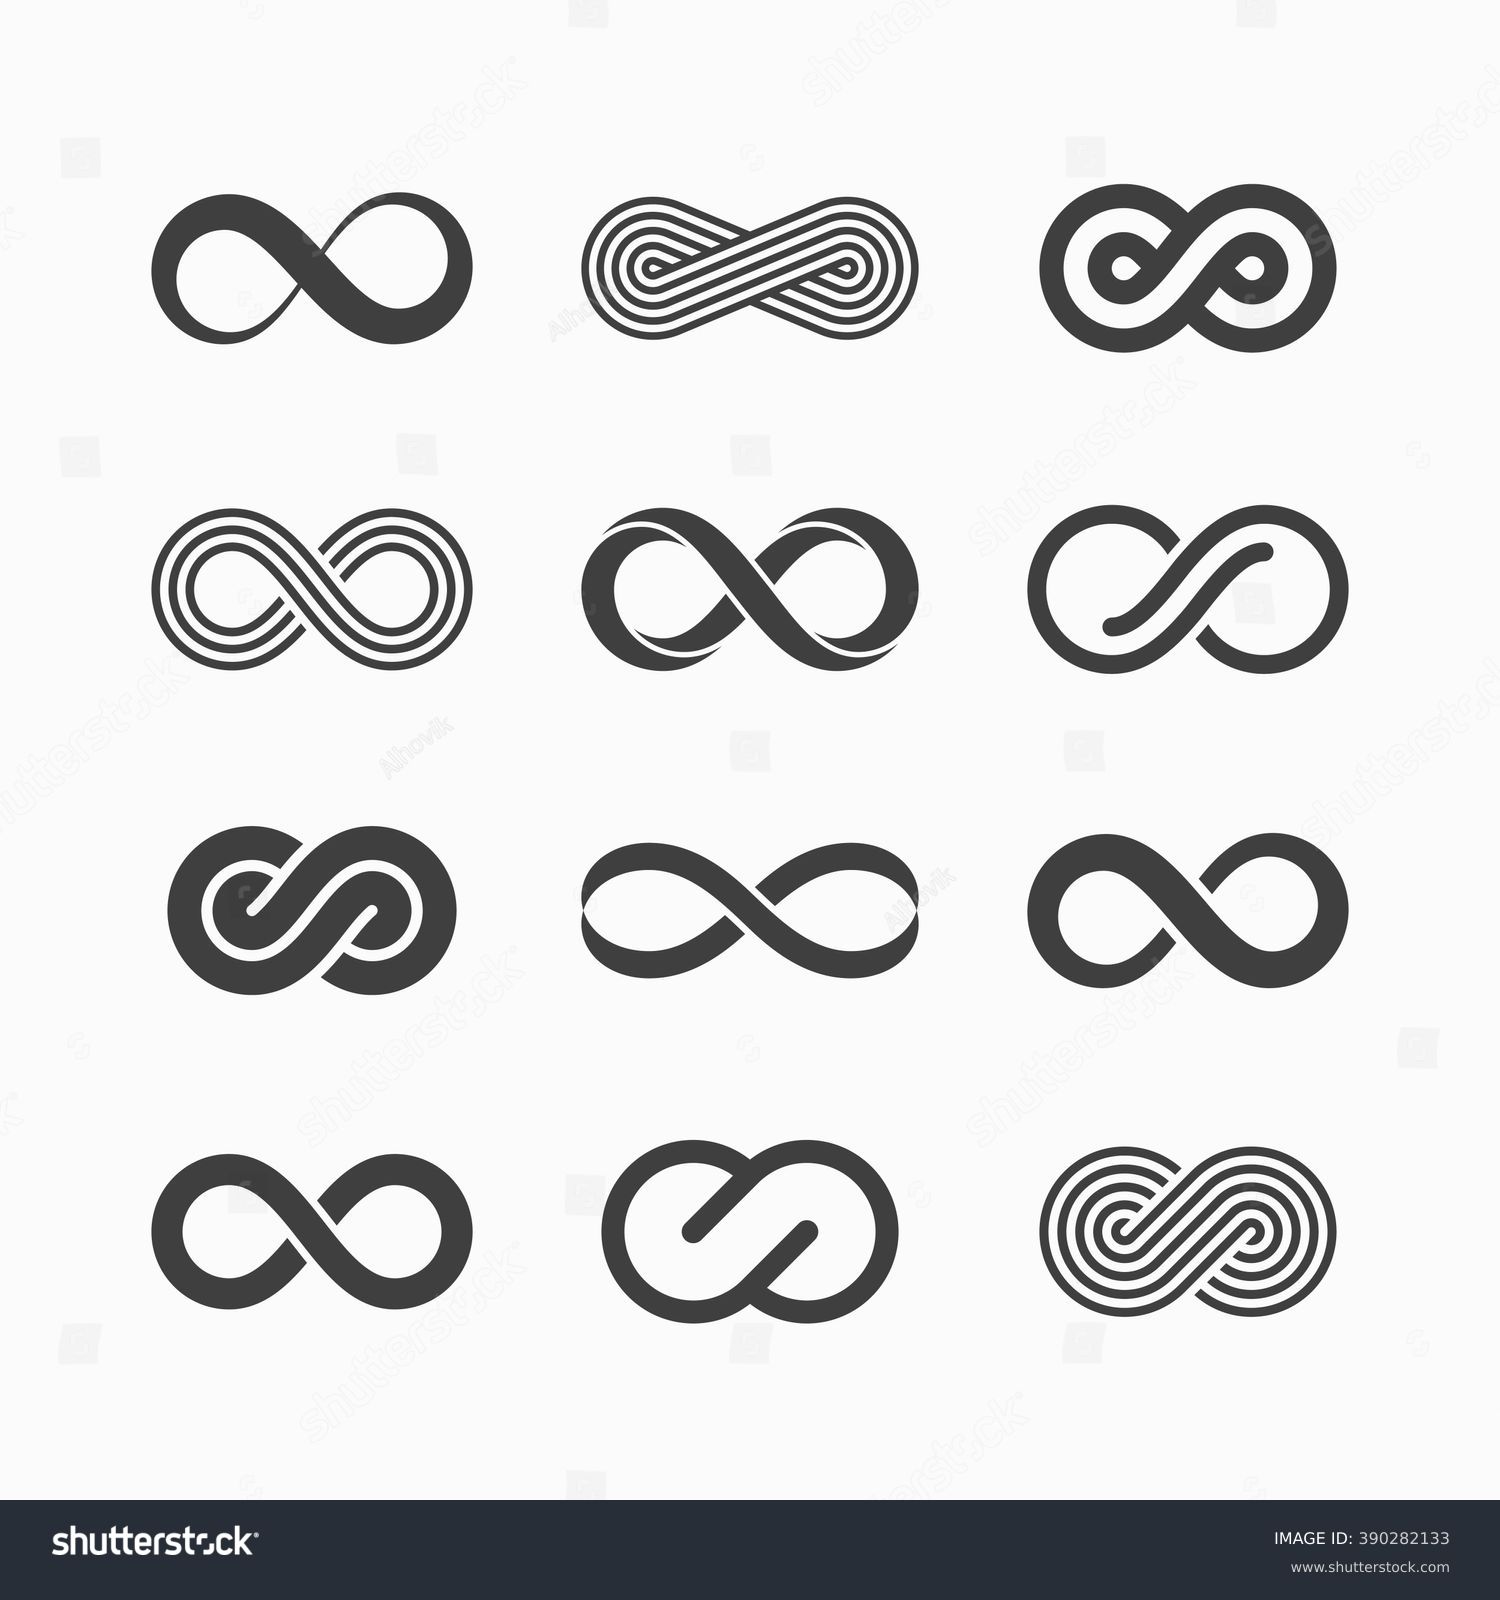 Infinity symbol icons vector illustration